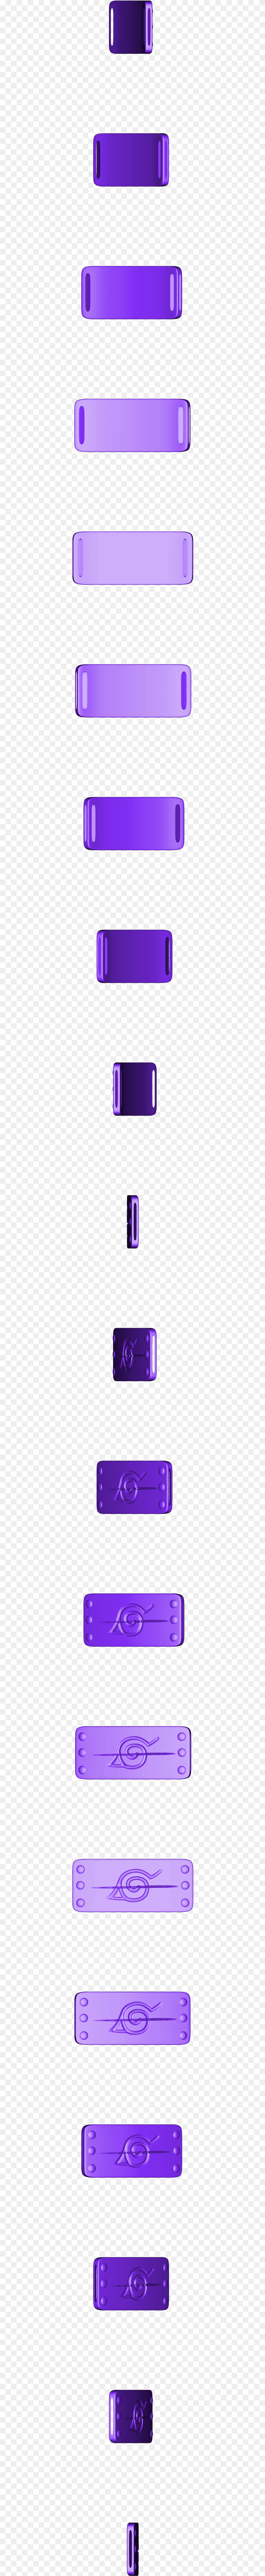 Mobile Phone Case, Light, Purple, Neon Png Image